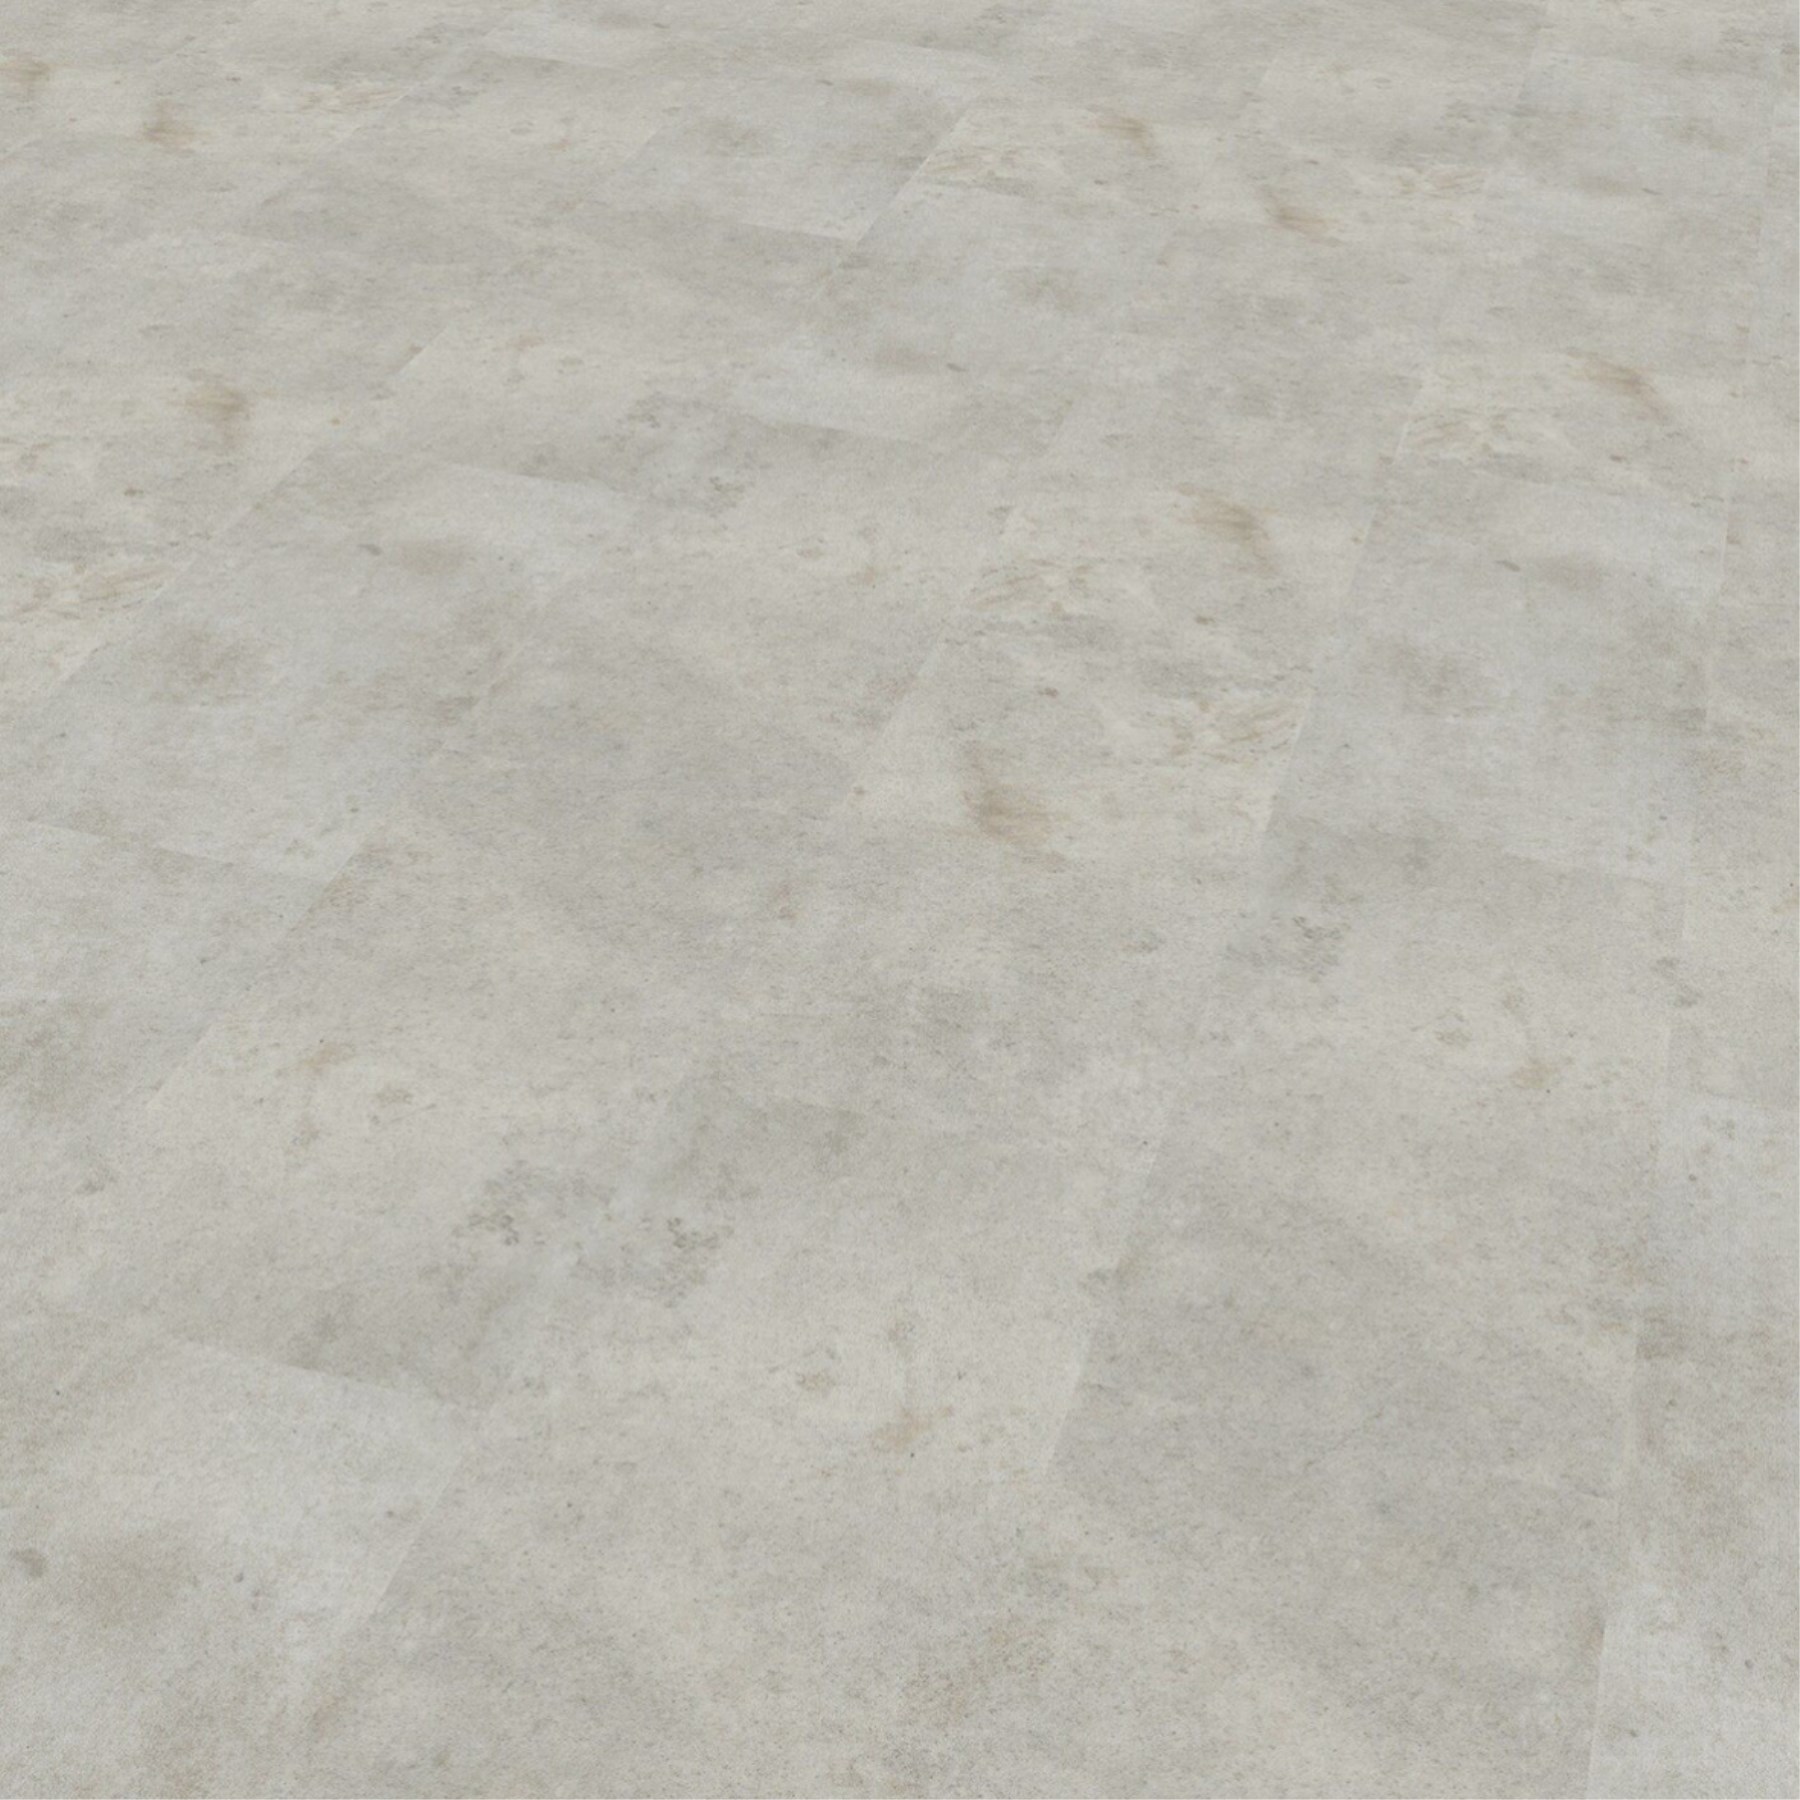 1253382 - Vinylboden Eleganto Beton Silber sand lackiert